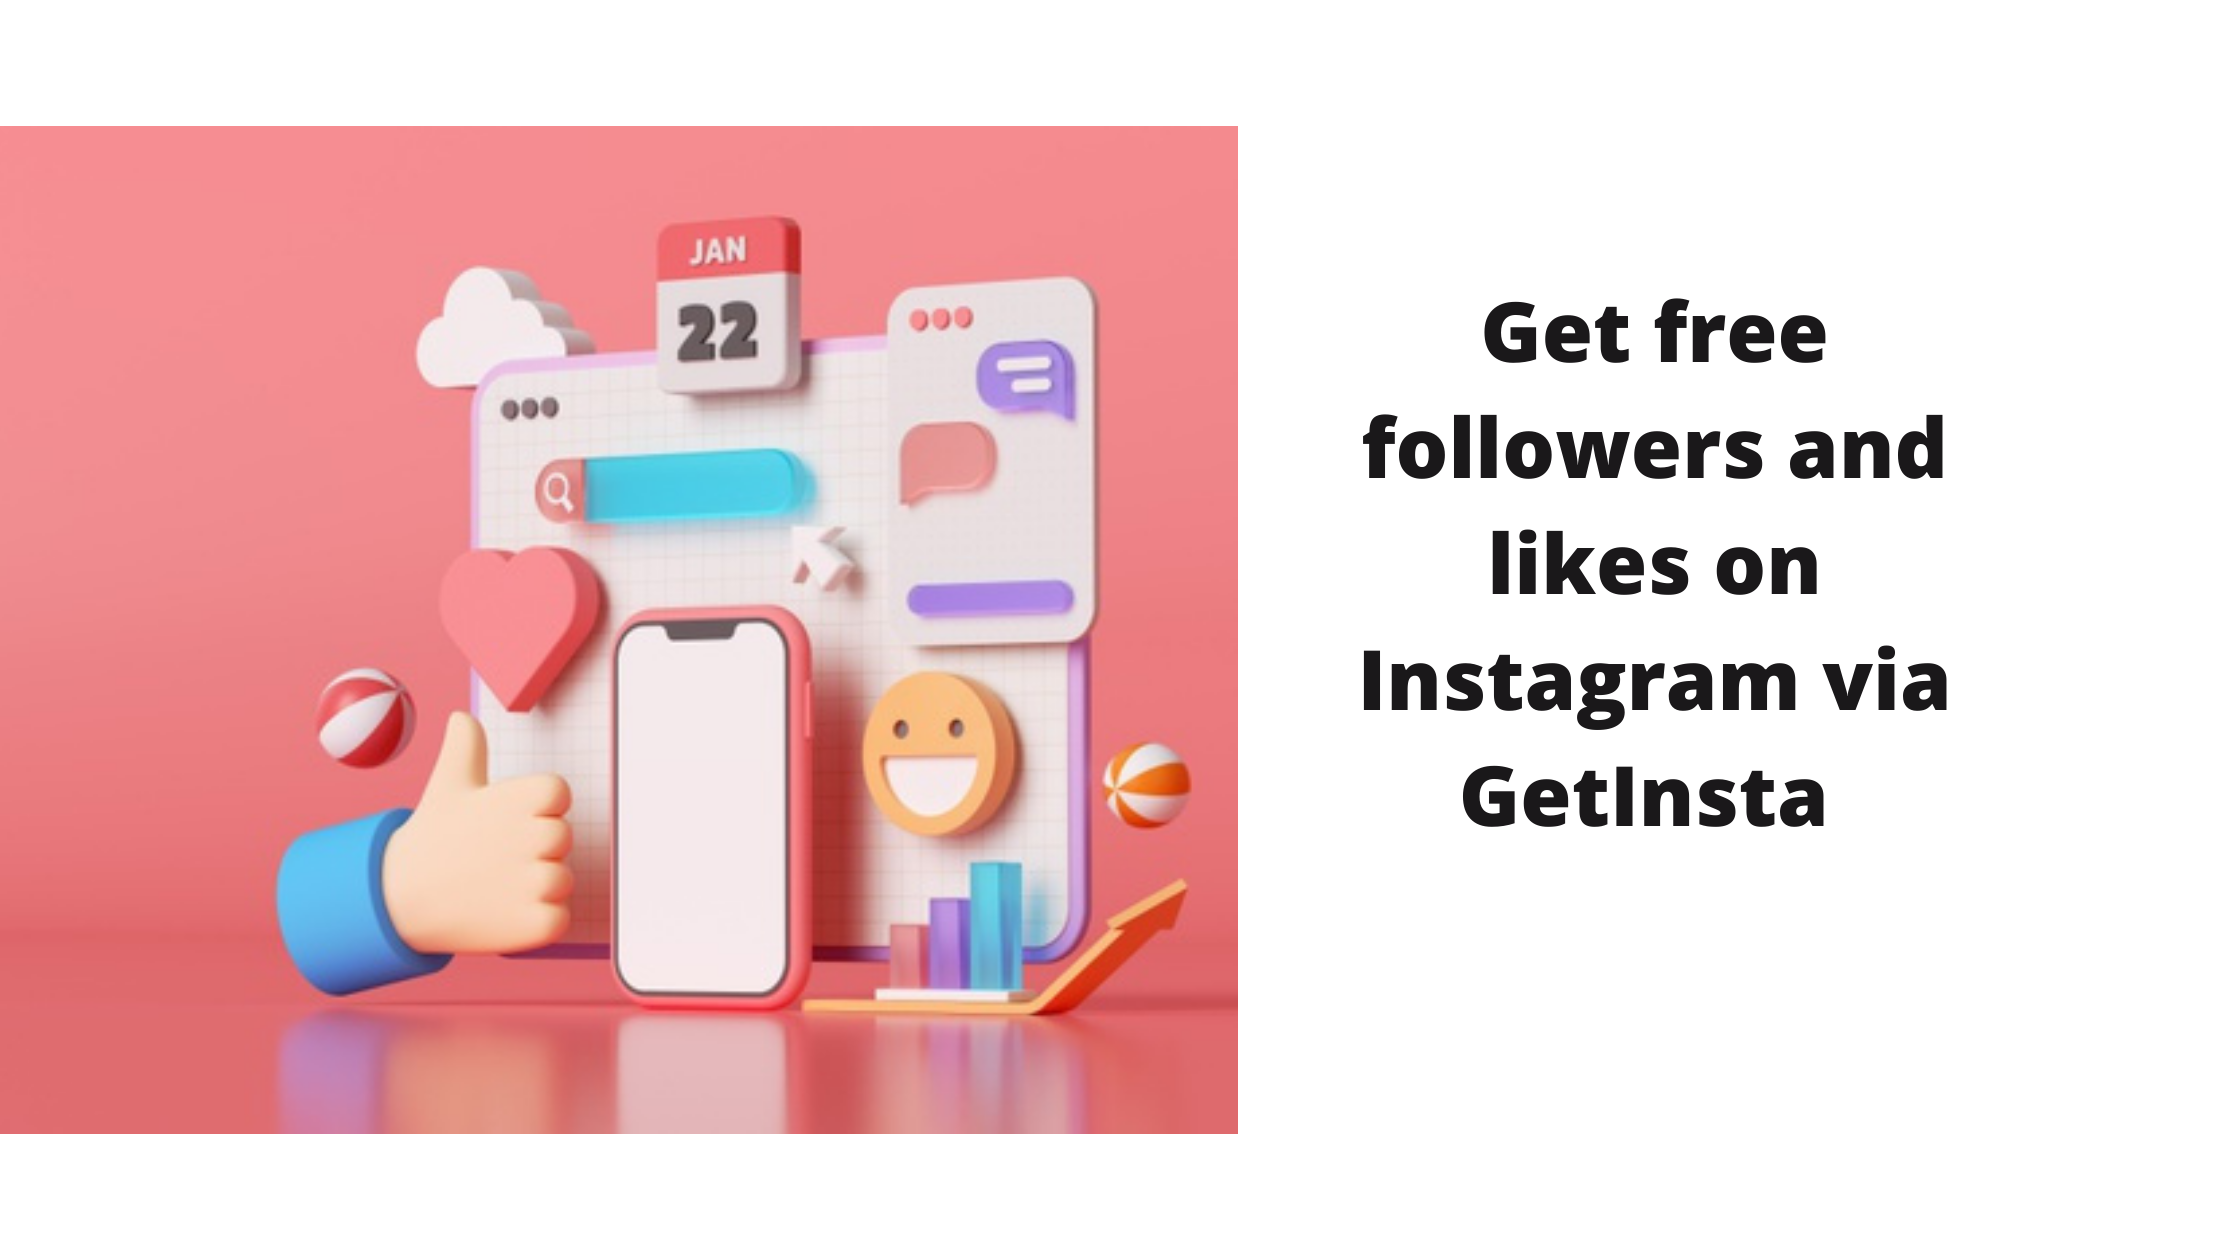 Get free followers and likes on Instagram via GetInsta 